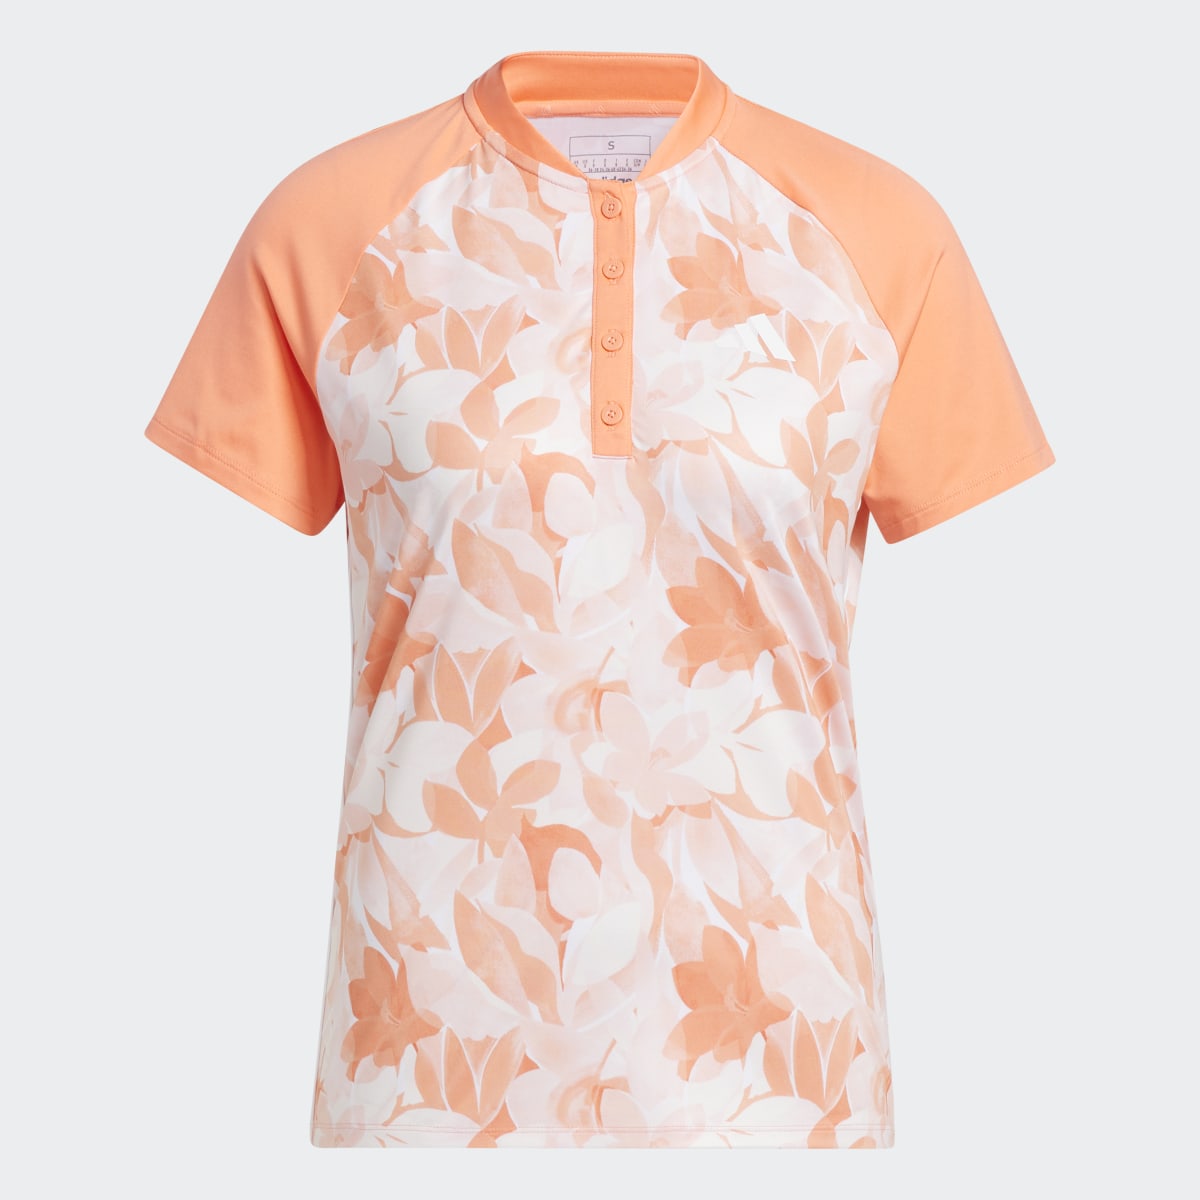 Adidas Women's Floral Golf Polo Shirt. 9